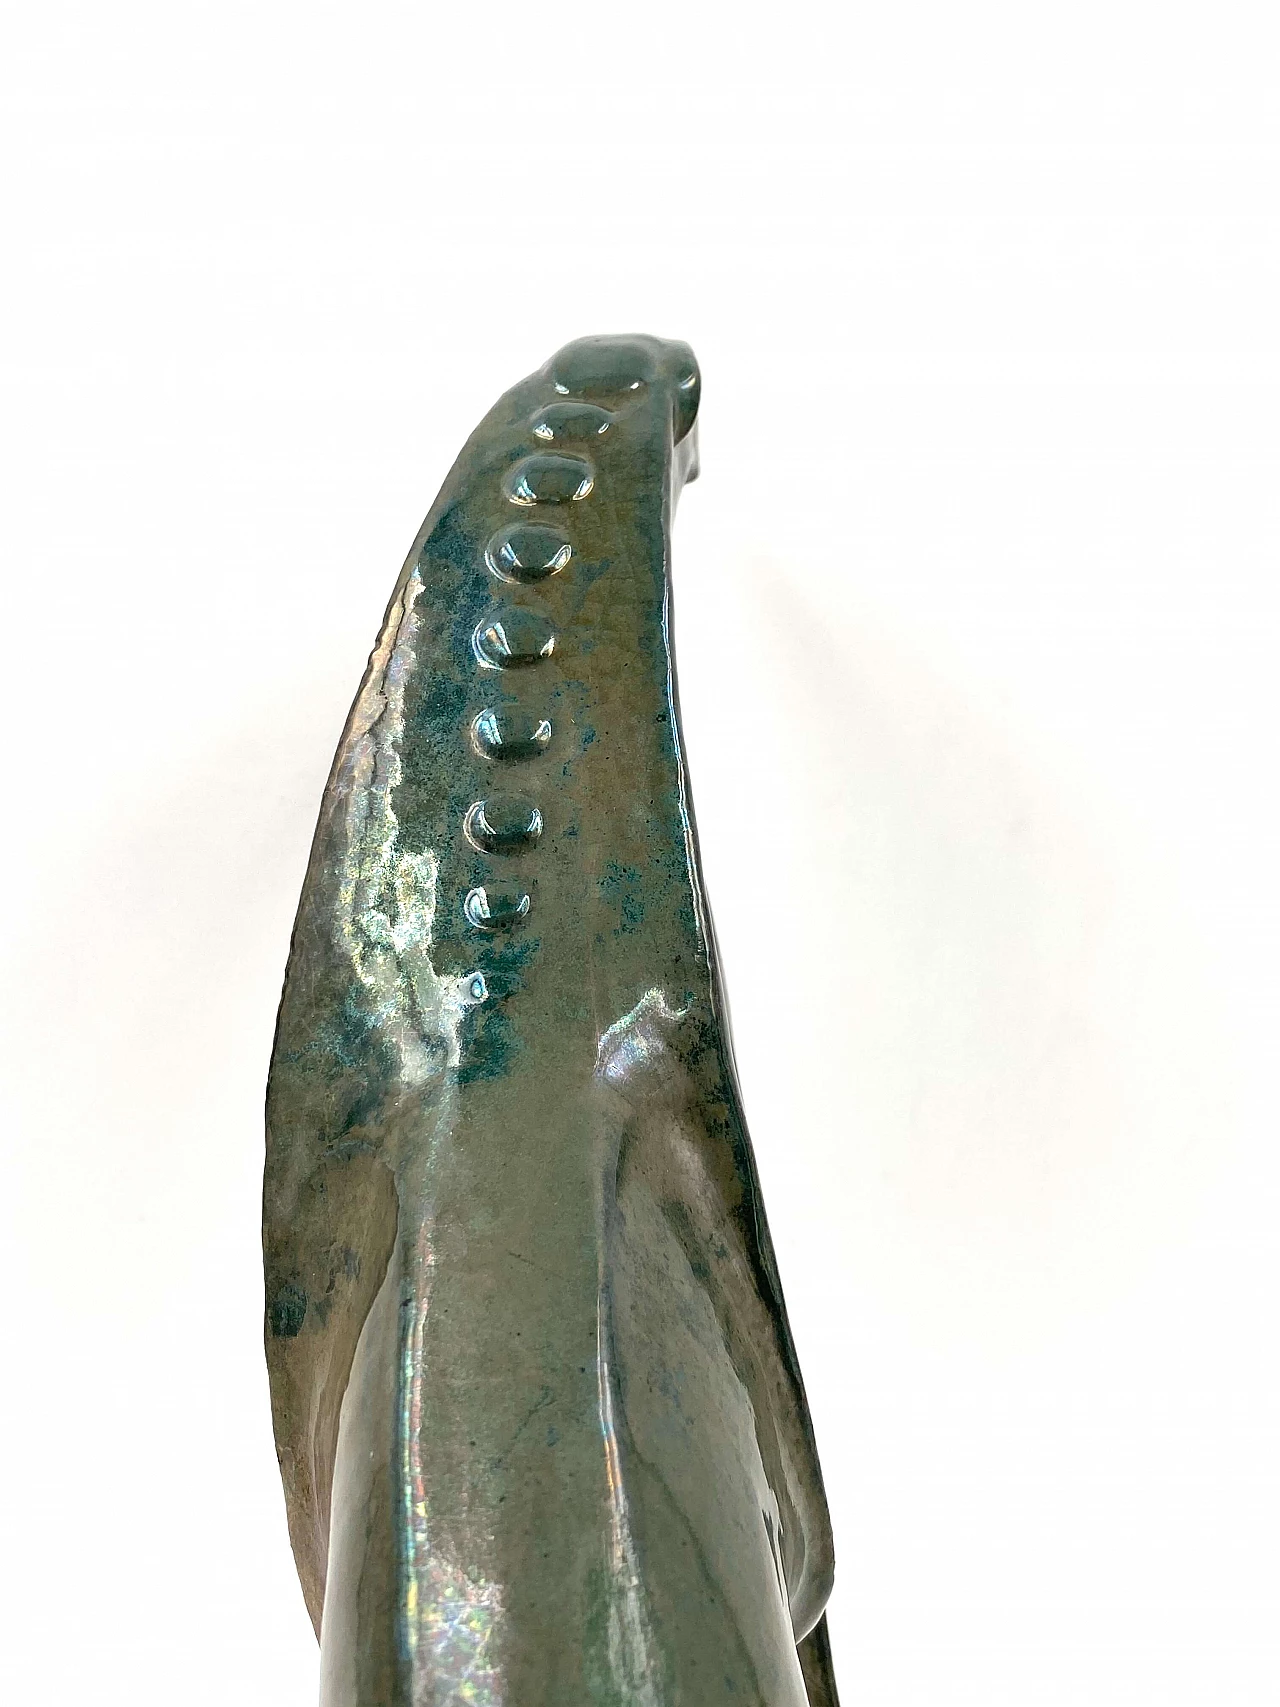 A. Chini, Créature Fantastique, scultura in ceramica craquelé, anni '30 1306783